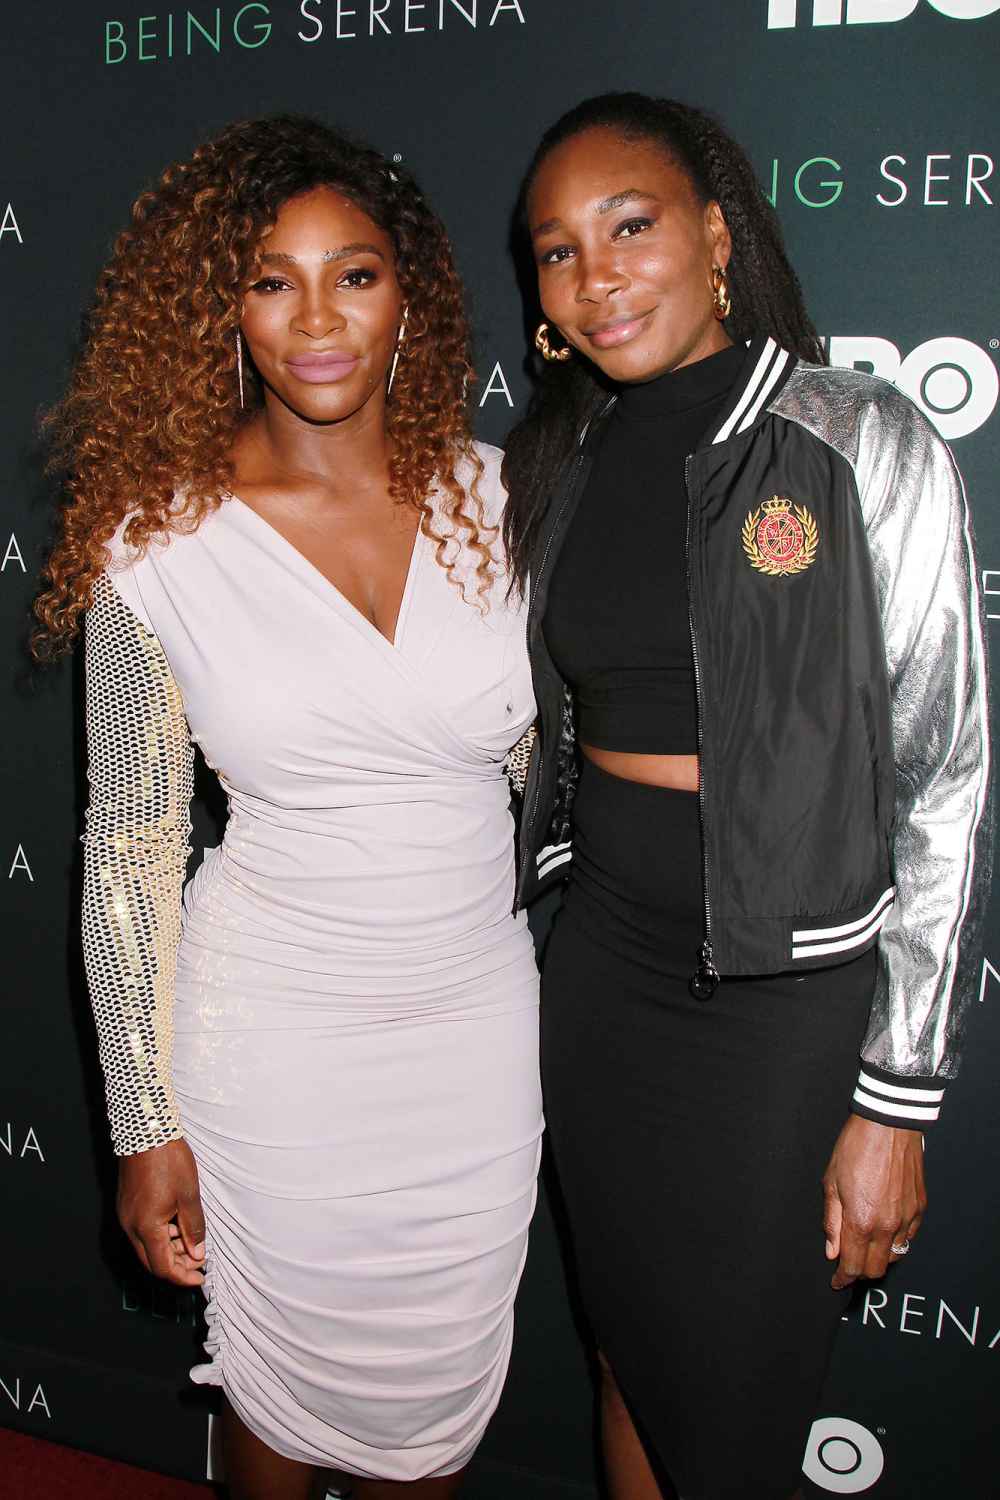 Serena Williams Trolls Sister Venus Williams for Her Shopping Habits